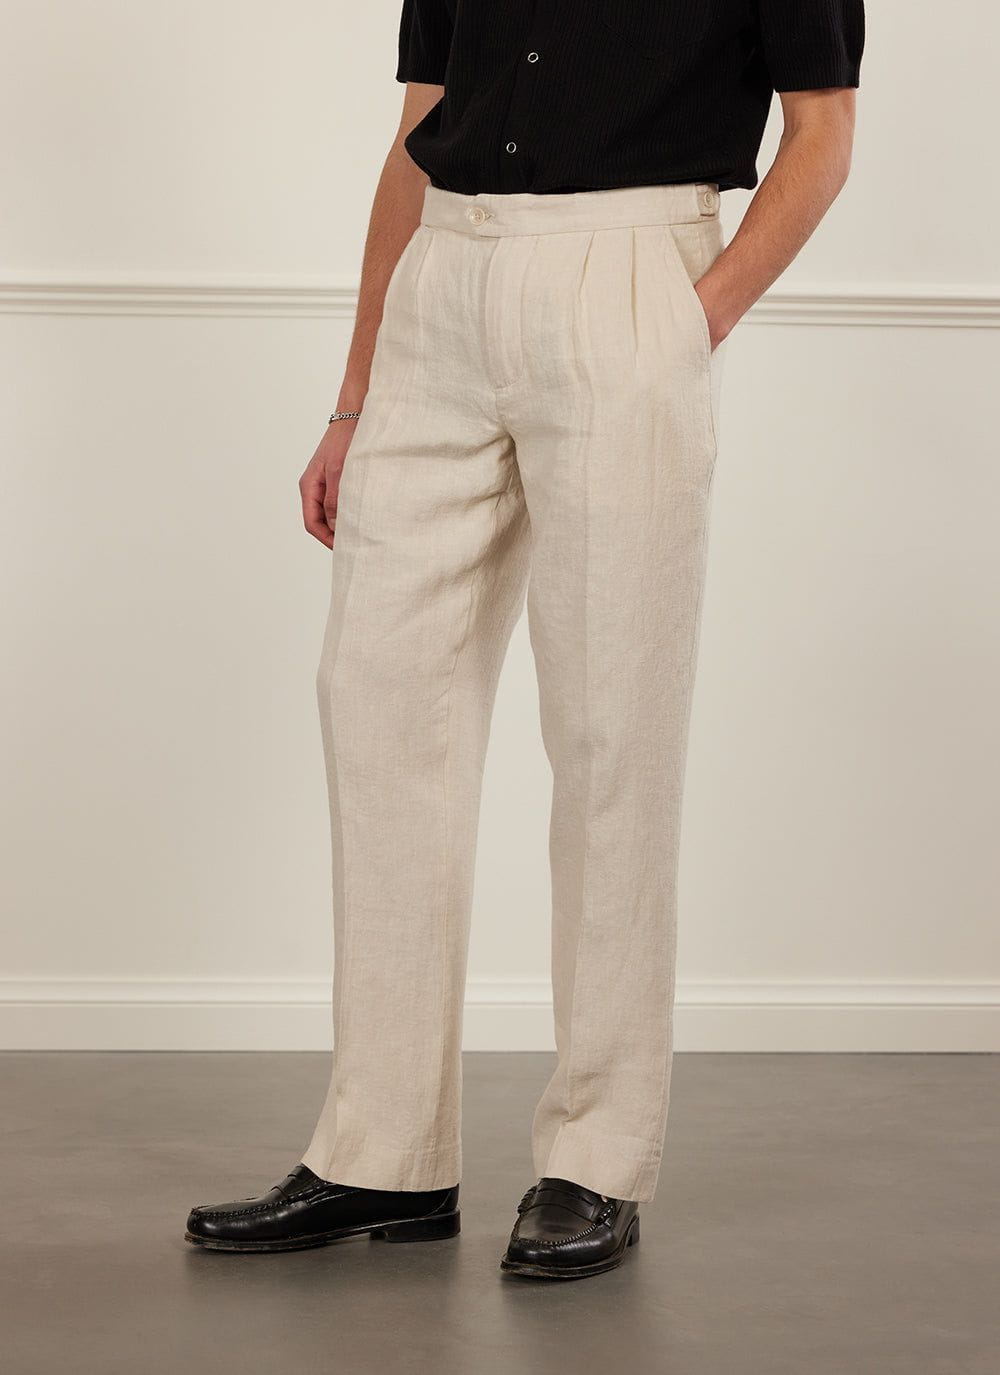 Buy Nelly Flowy Drawstring Linen Pants - Beige | Nelly.com